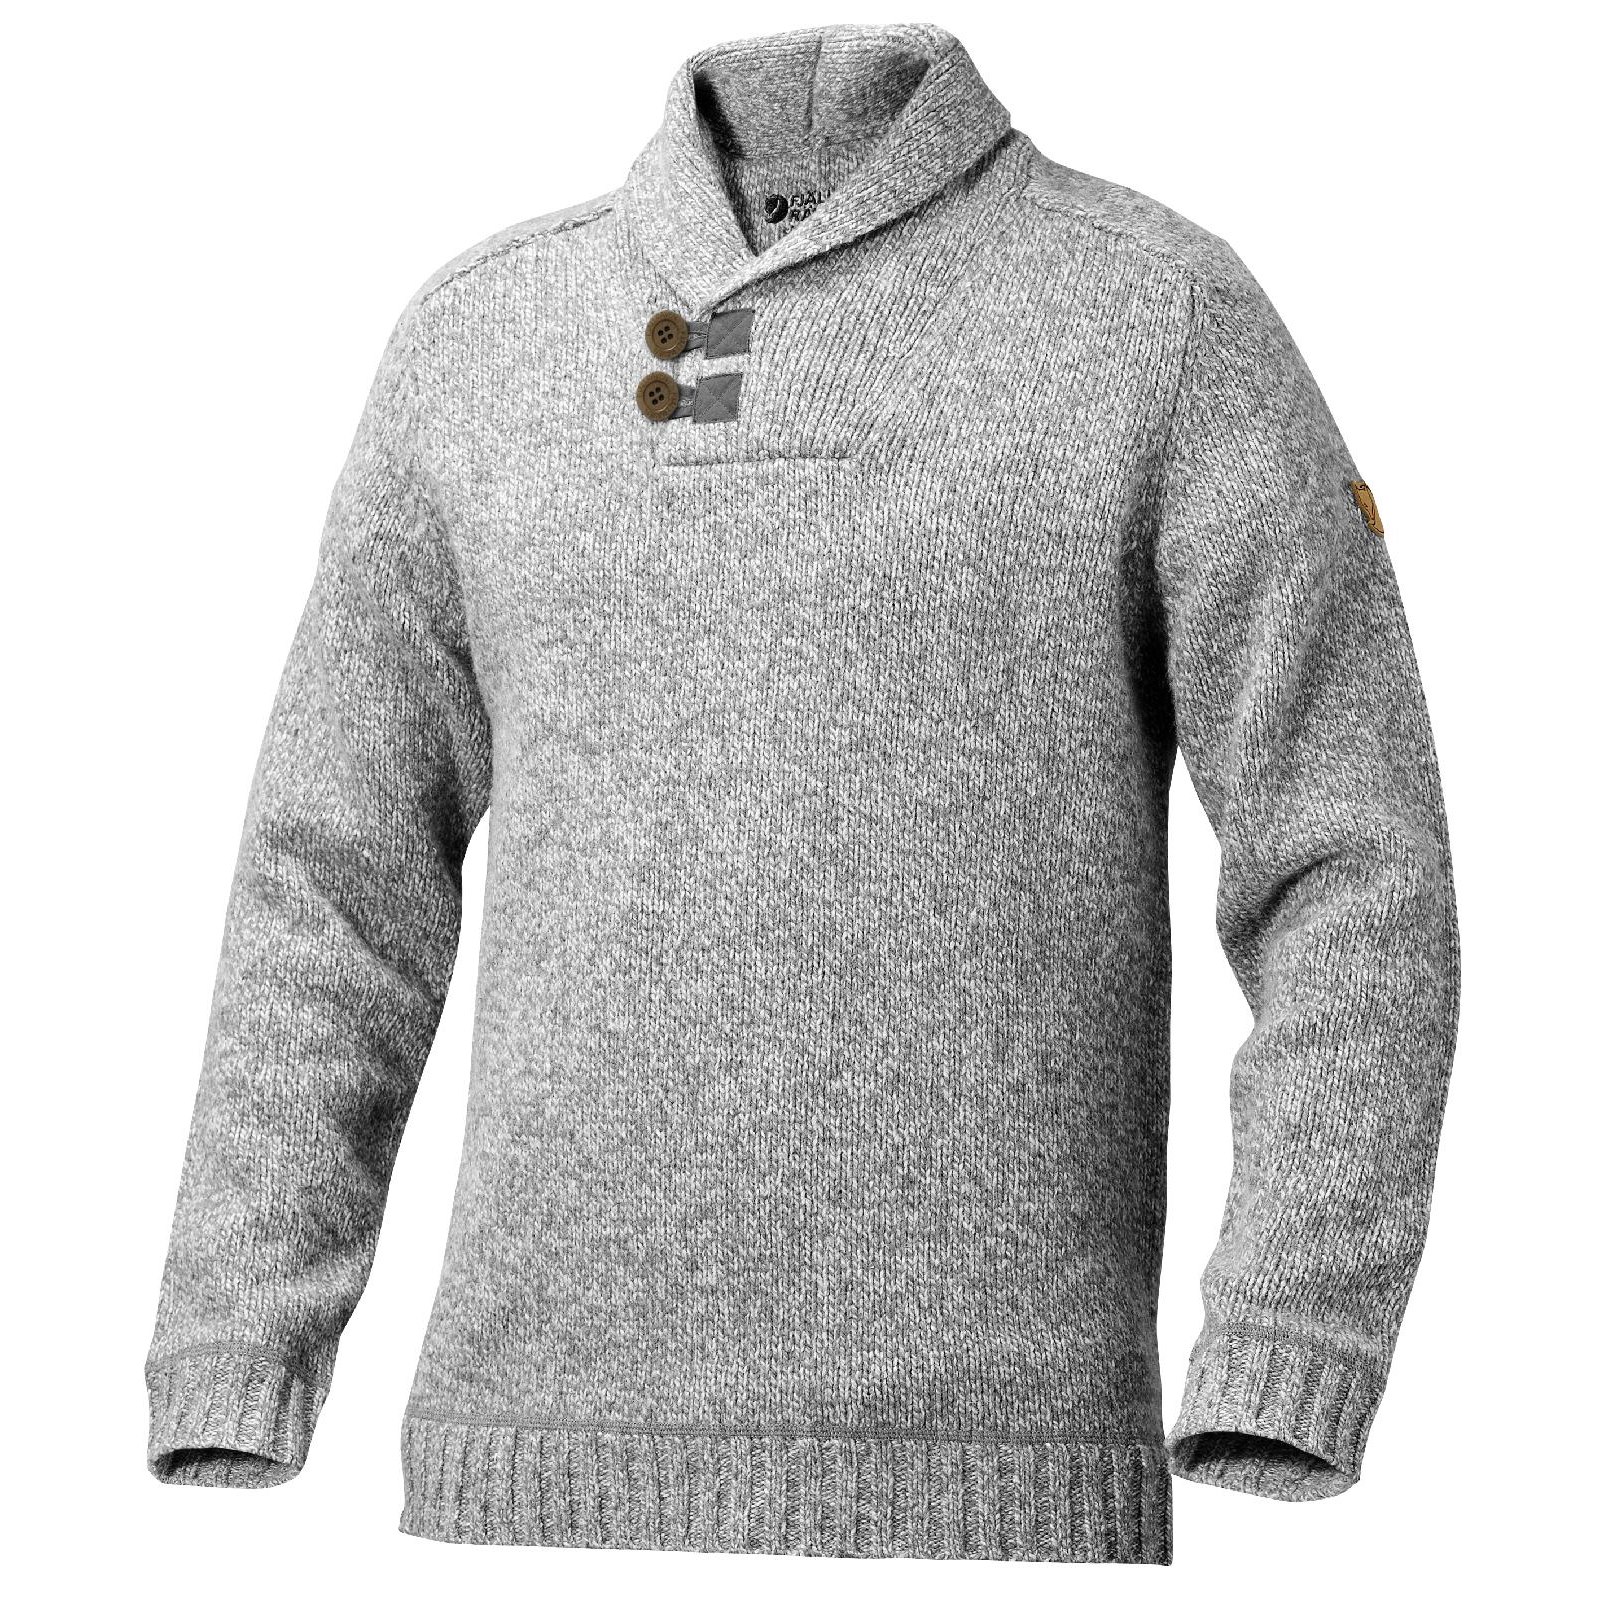 Men's Lada Sweater Grey | Buy Men's Lada Sweater Grey here | Outnorth